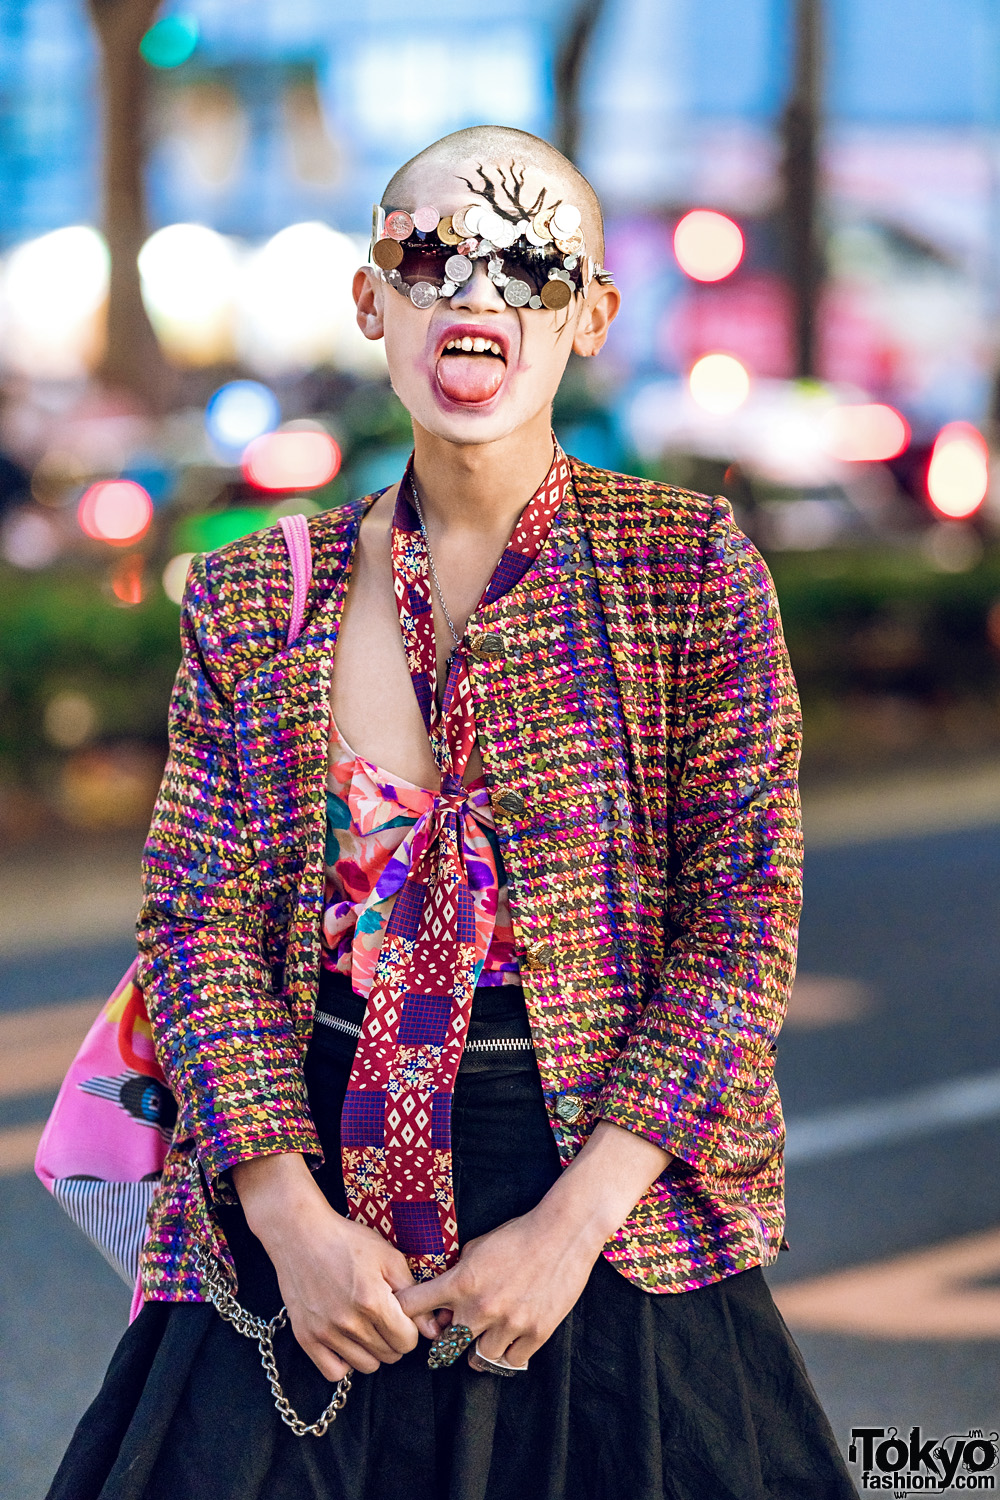 Japanese Fashion Designer in Avant-Garde Street Style w/ Necktie, Comme